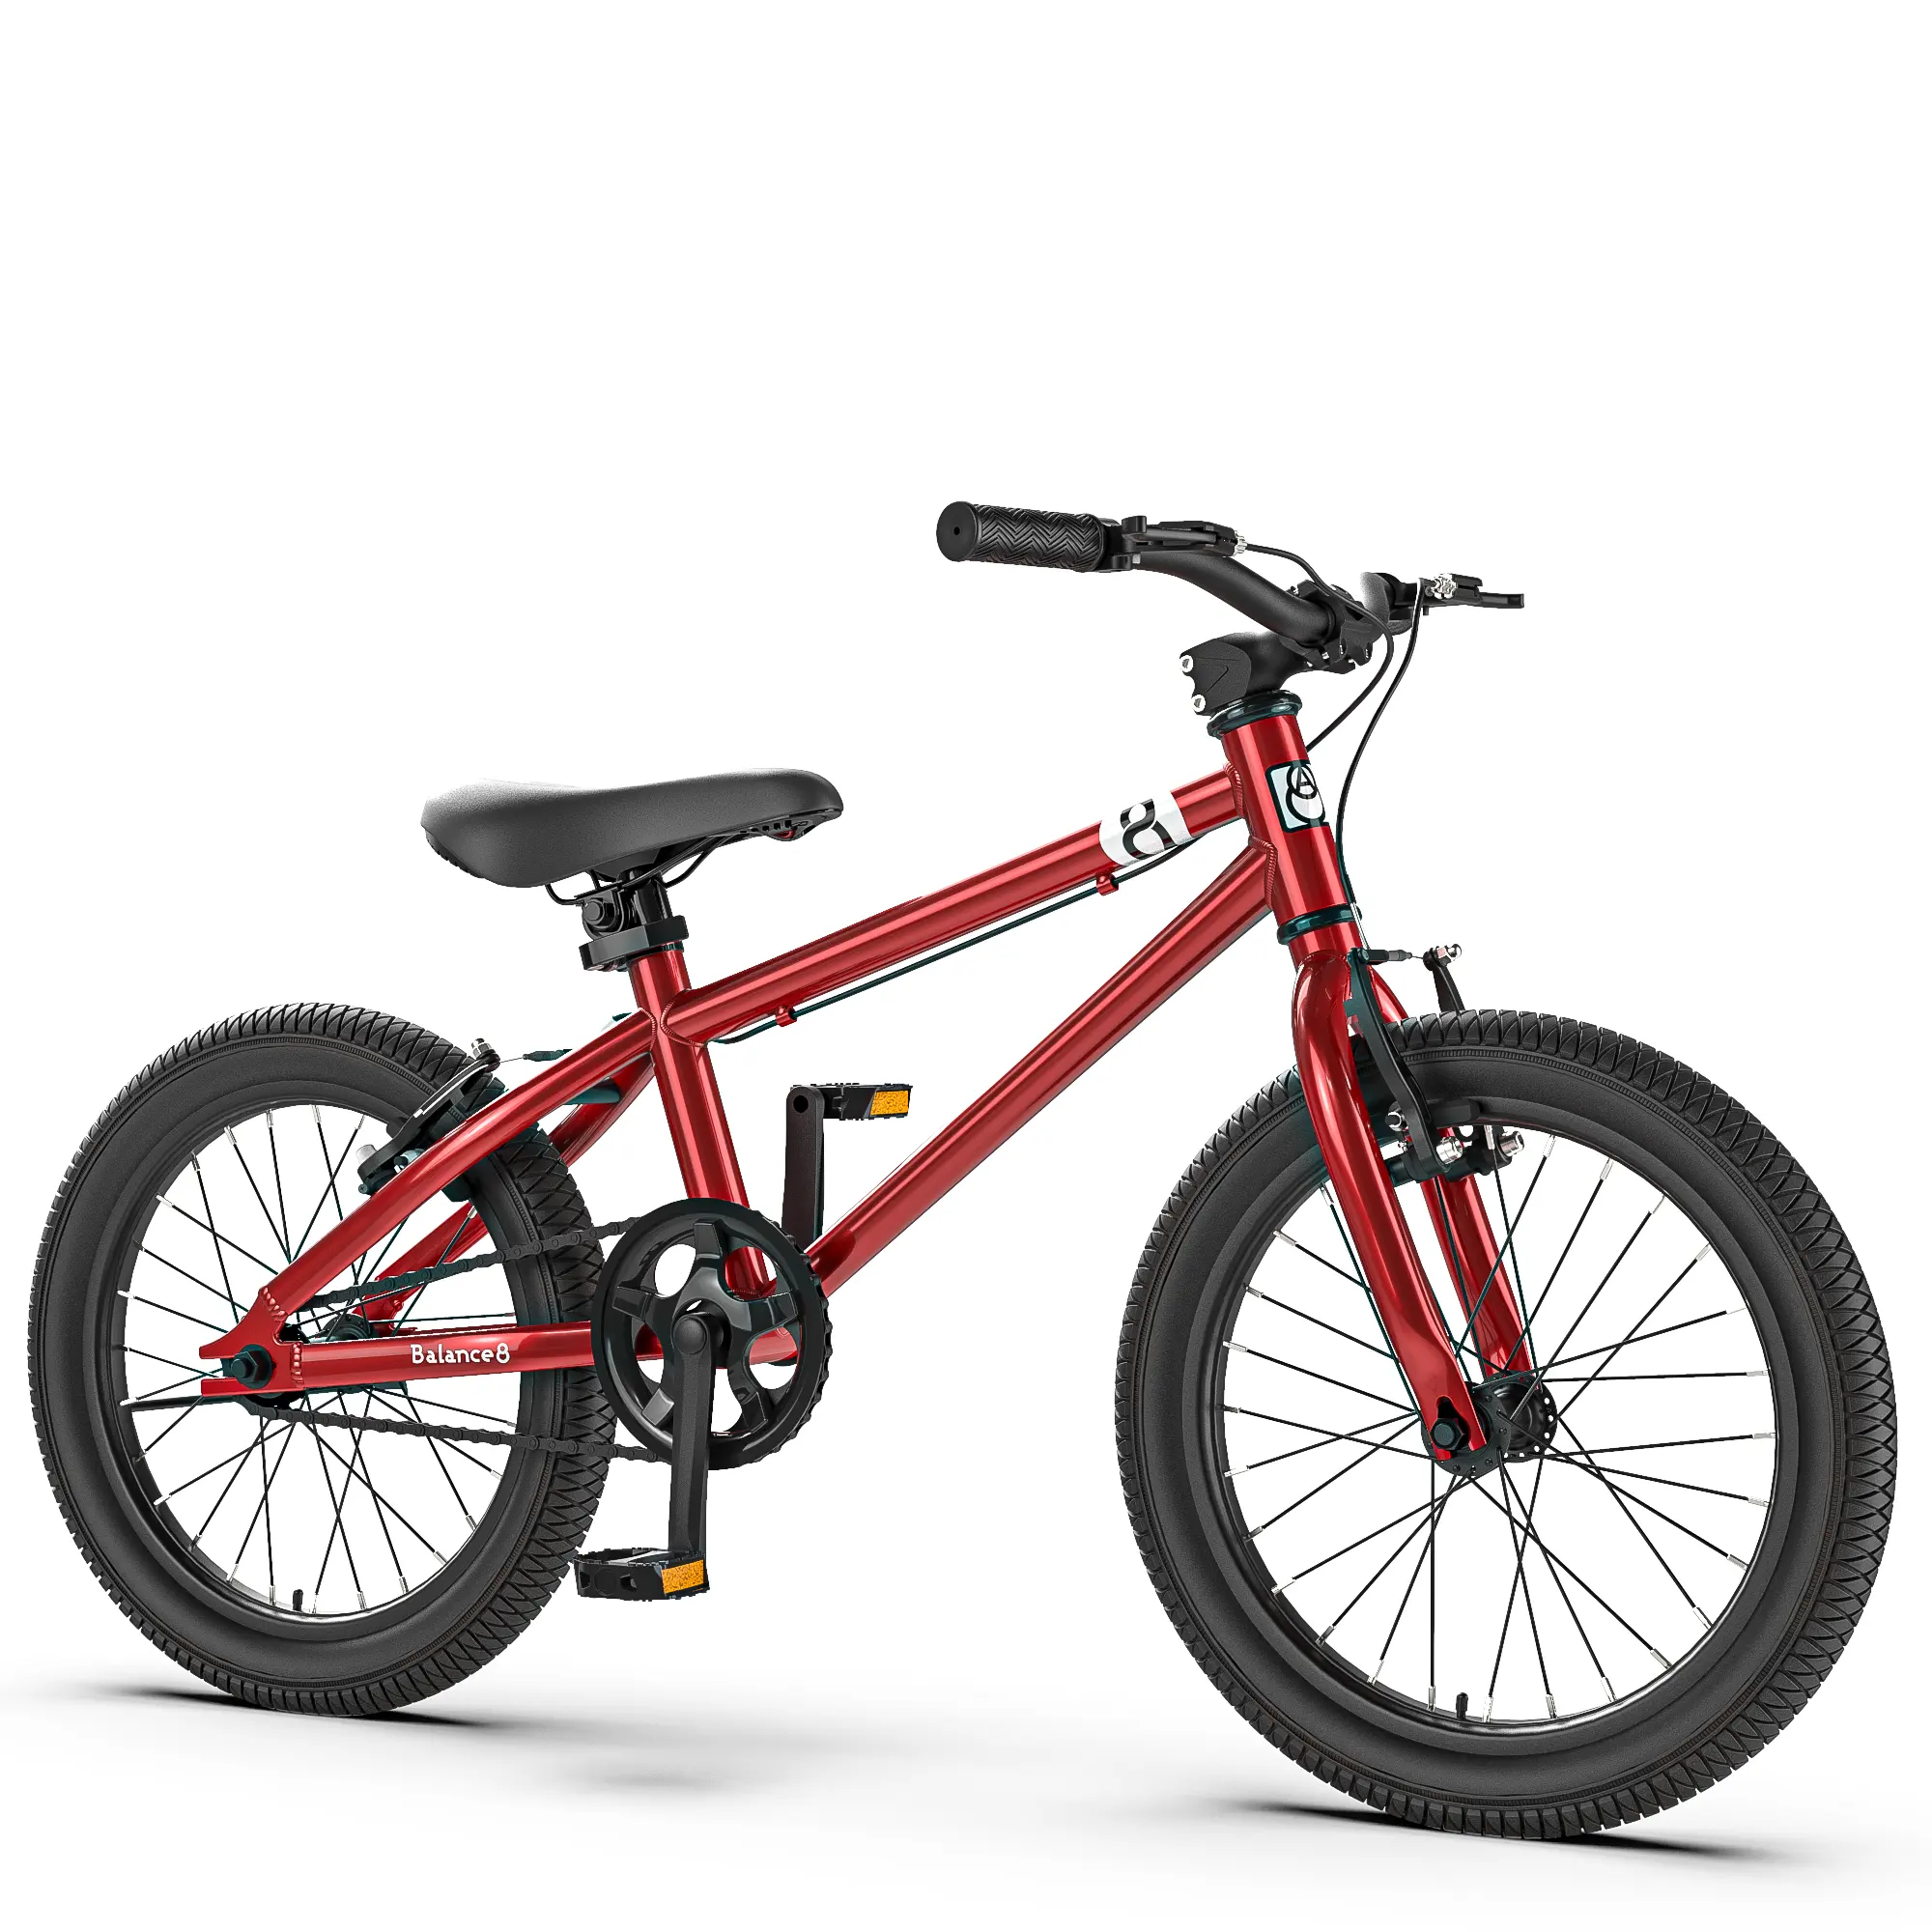 2022 billigste bmx 20 inch Freestyle Fat Boy BMX Fahrrad